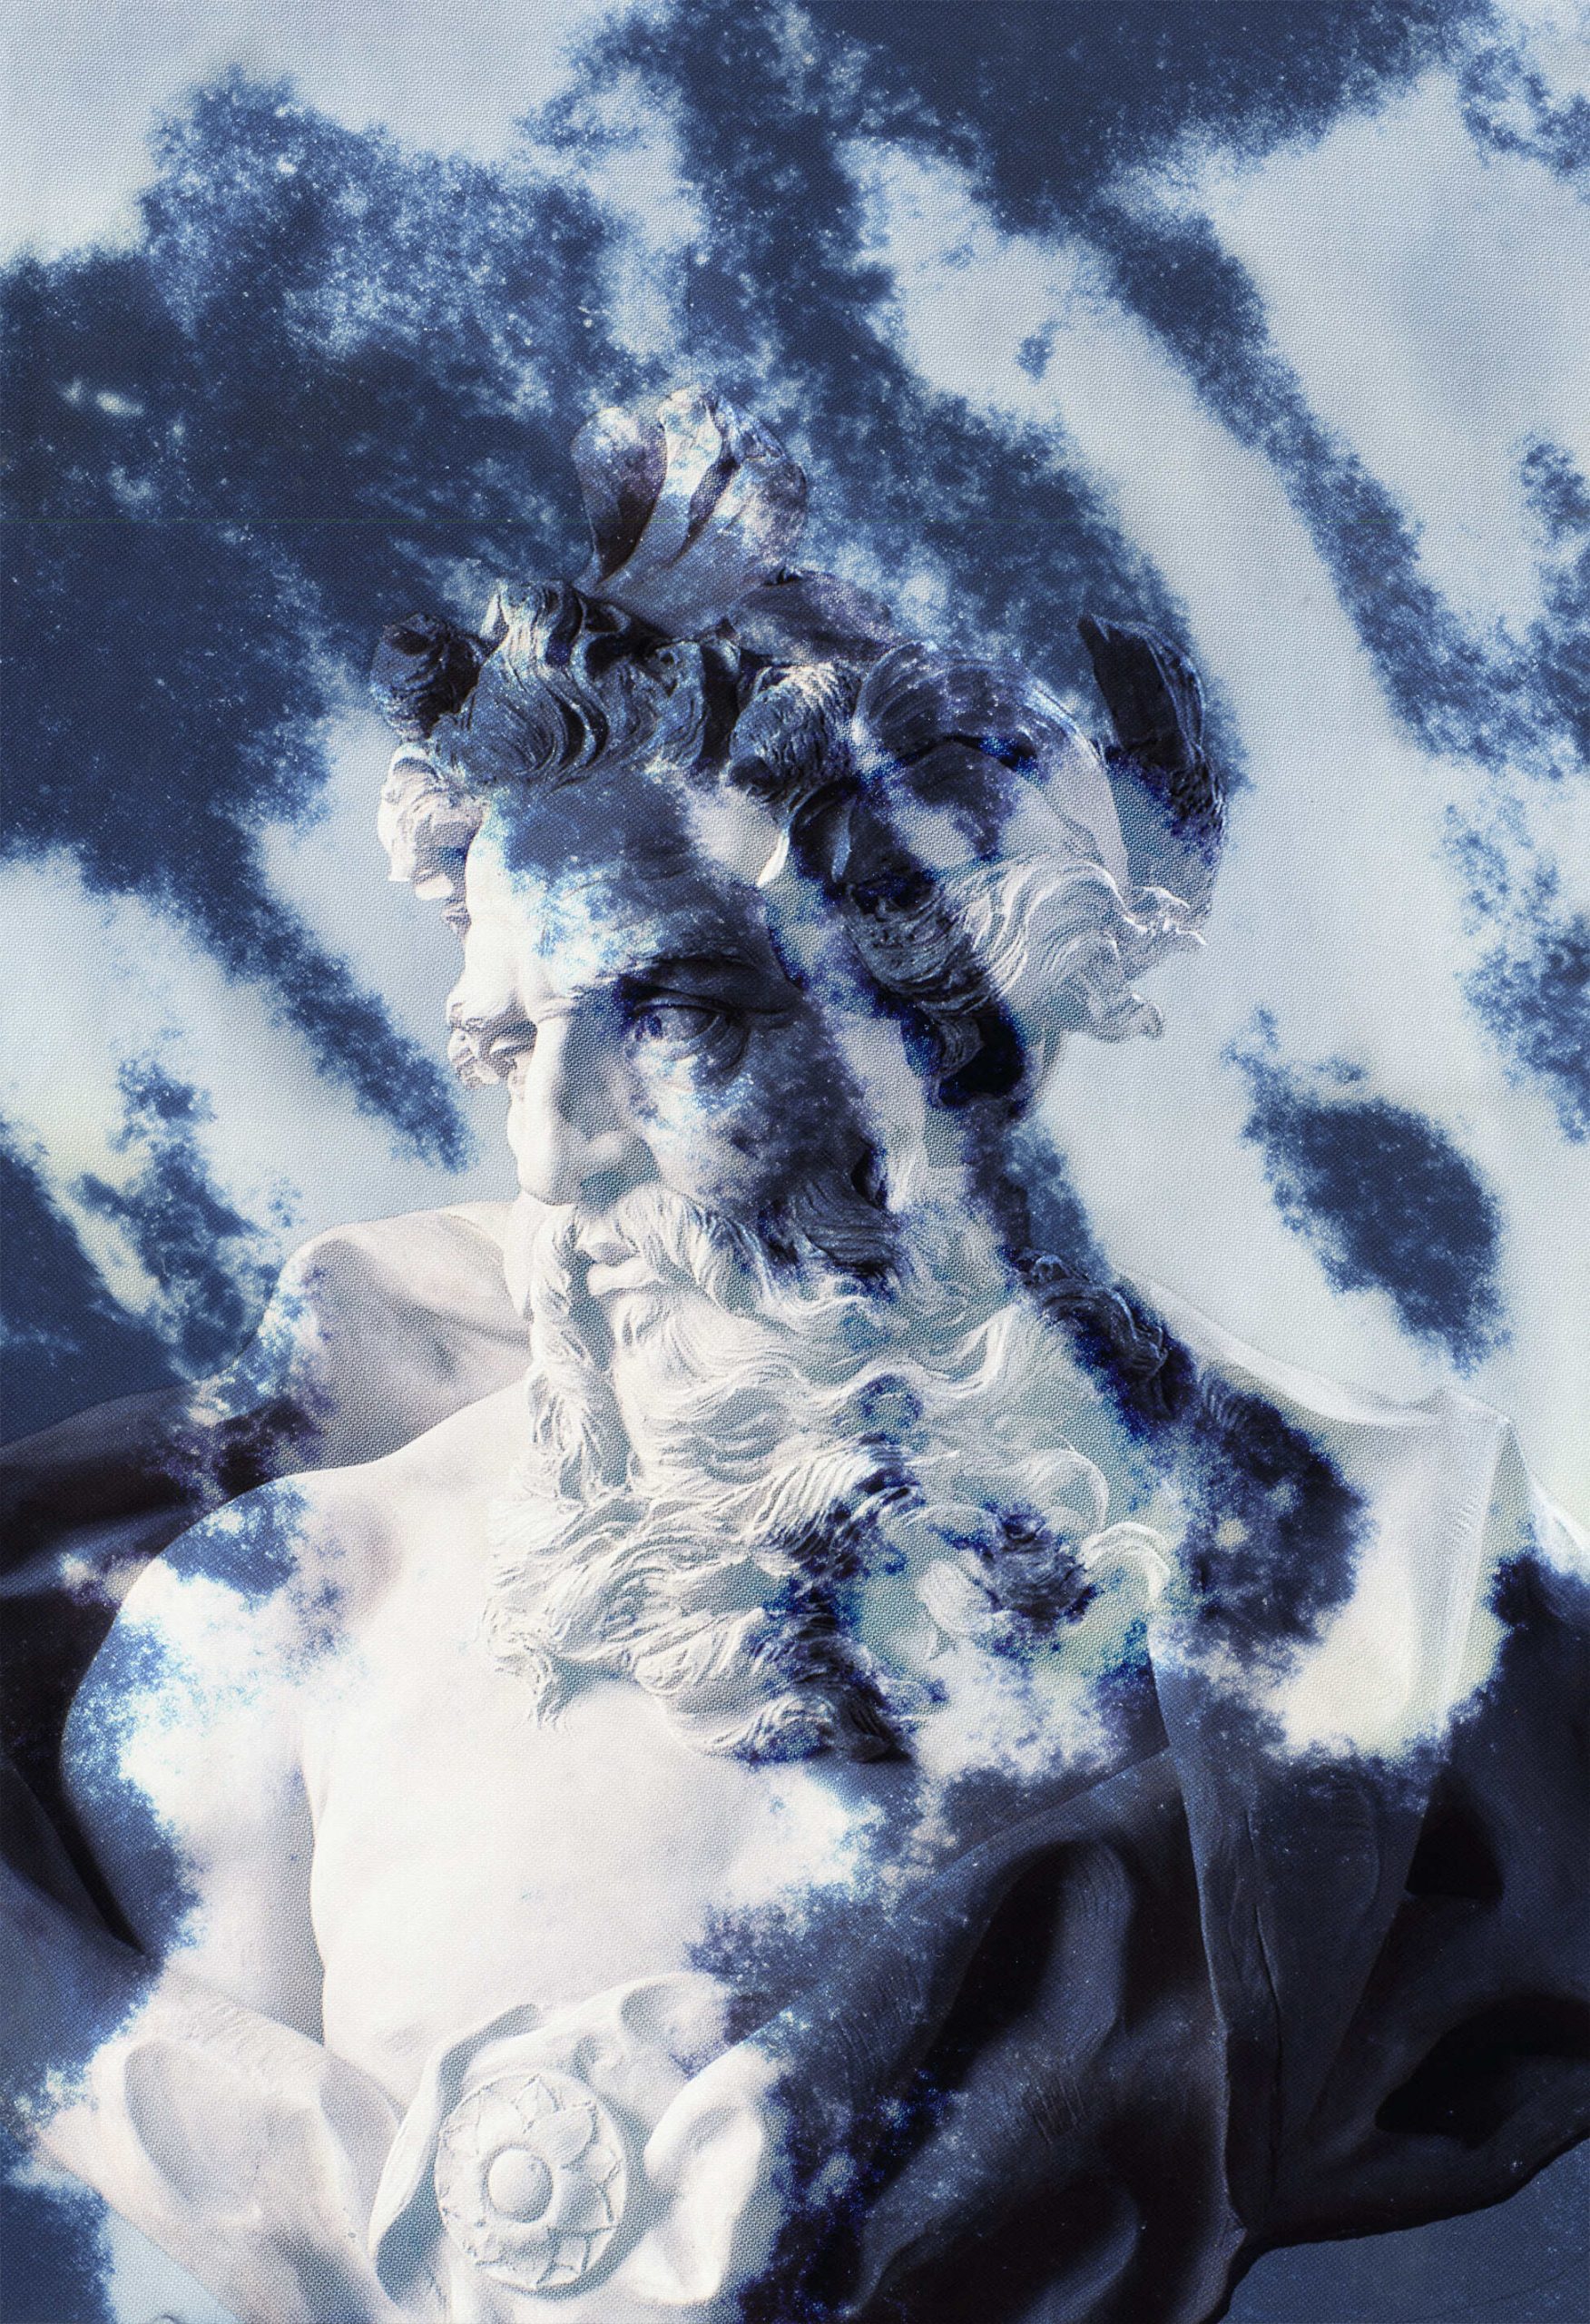 Untitled, Poseidon #15, 2018, Digital C-Print, 19 x 13inches